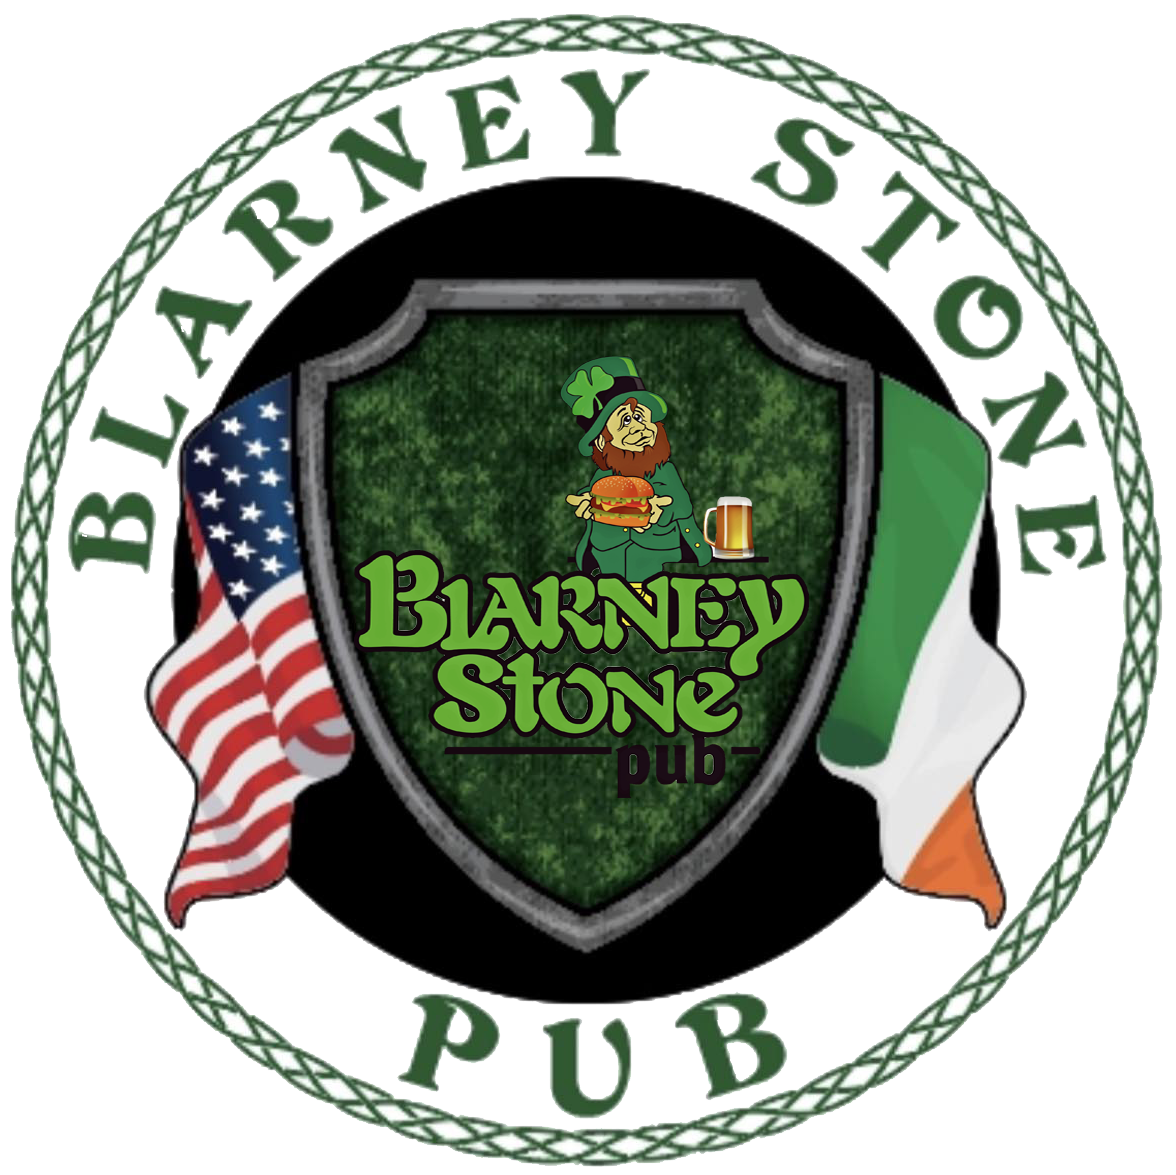 The Blarney Stone Pub Home